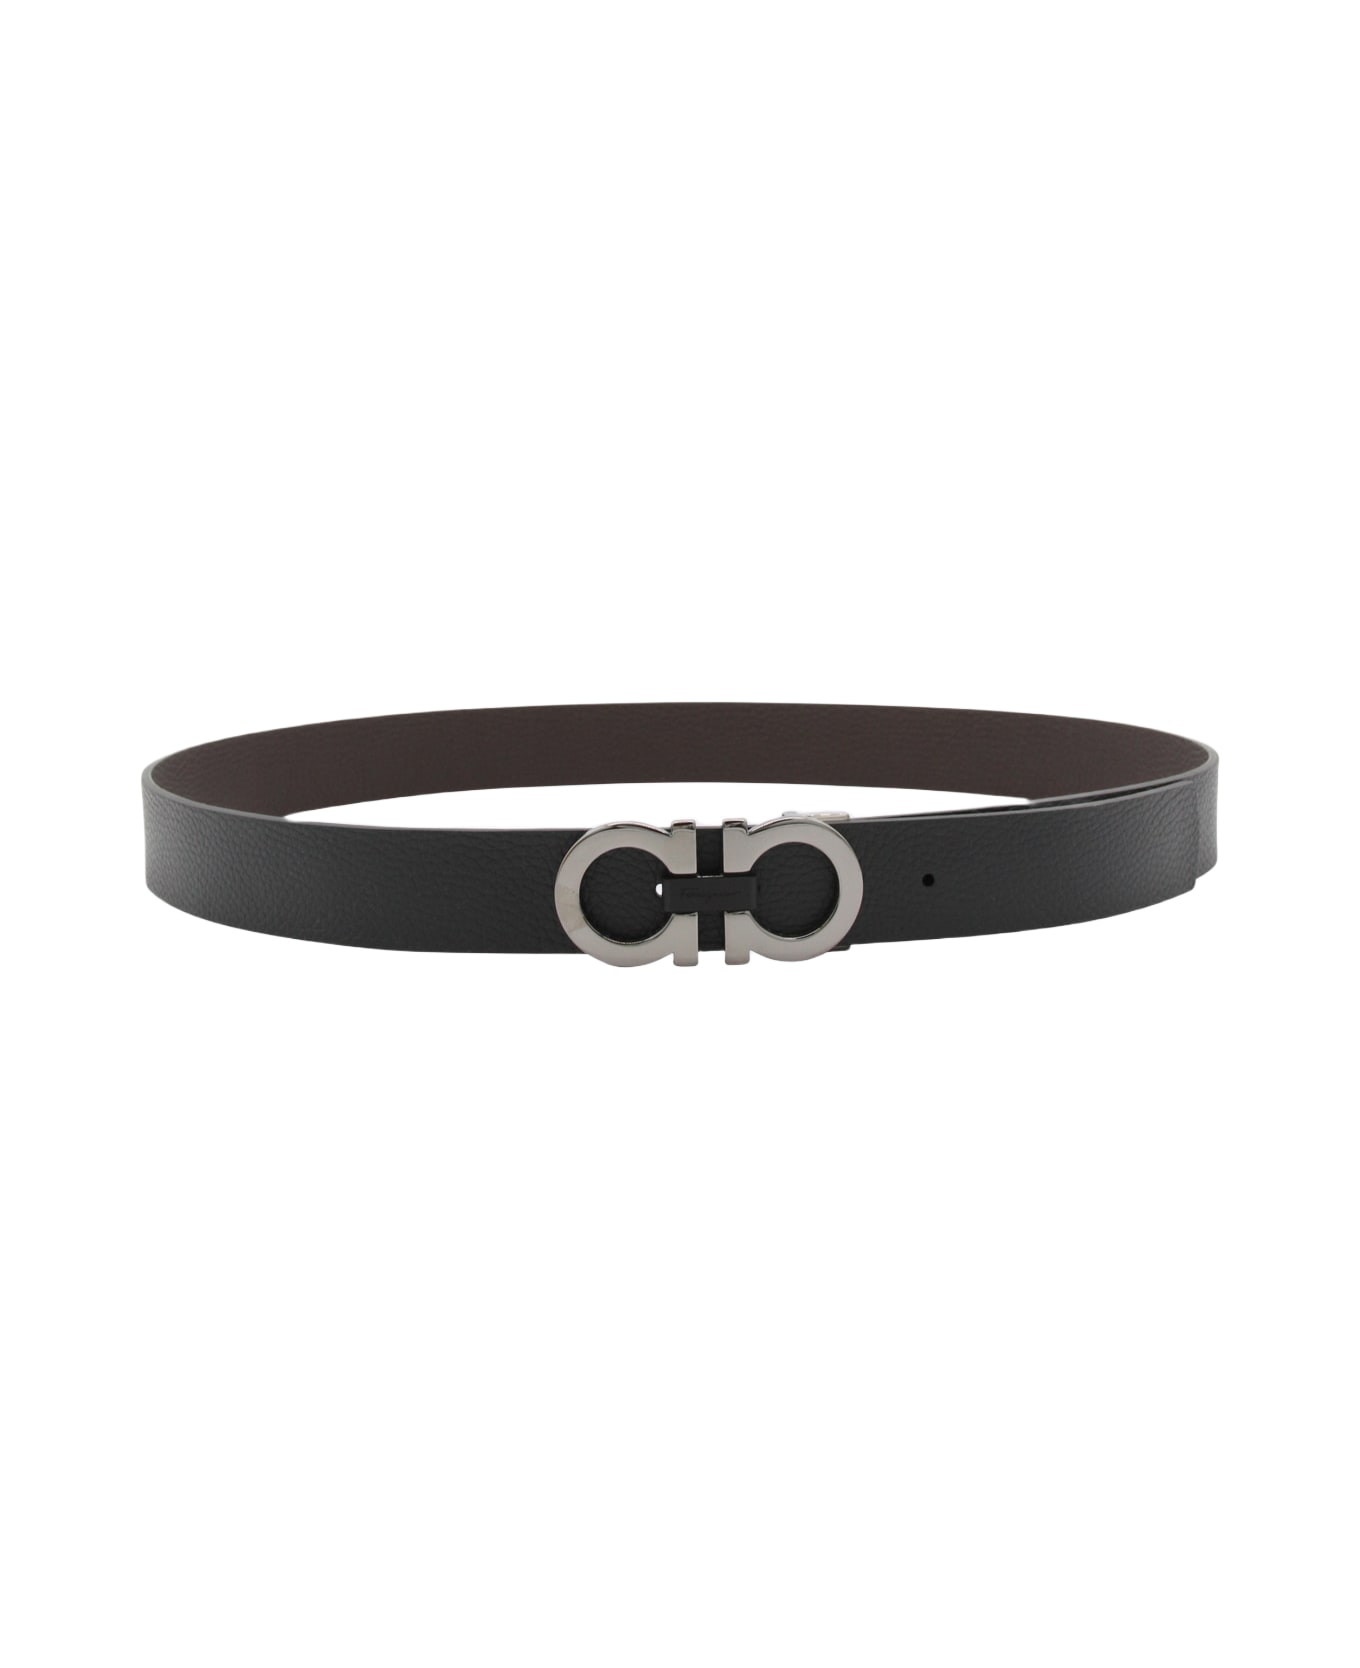 Ferragamo Black And Silver Leather Gancini Belt - NERO || HICKORY ベルト